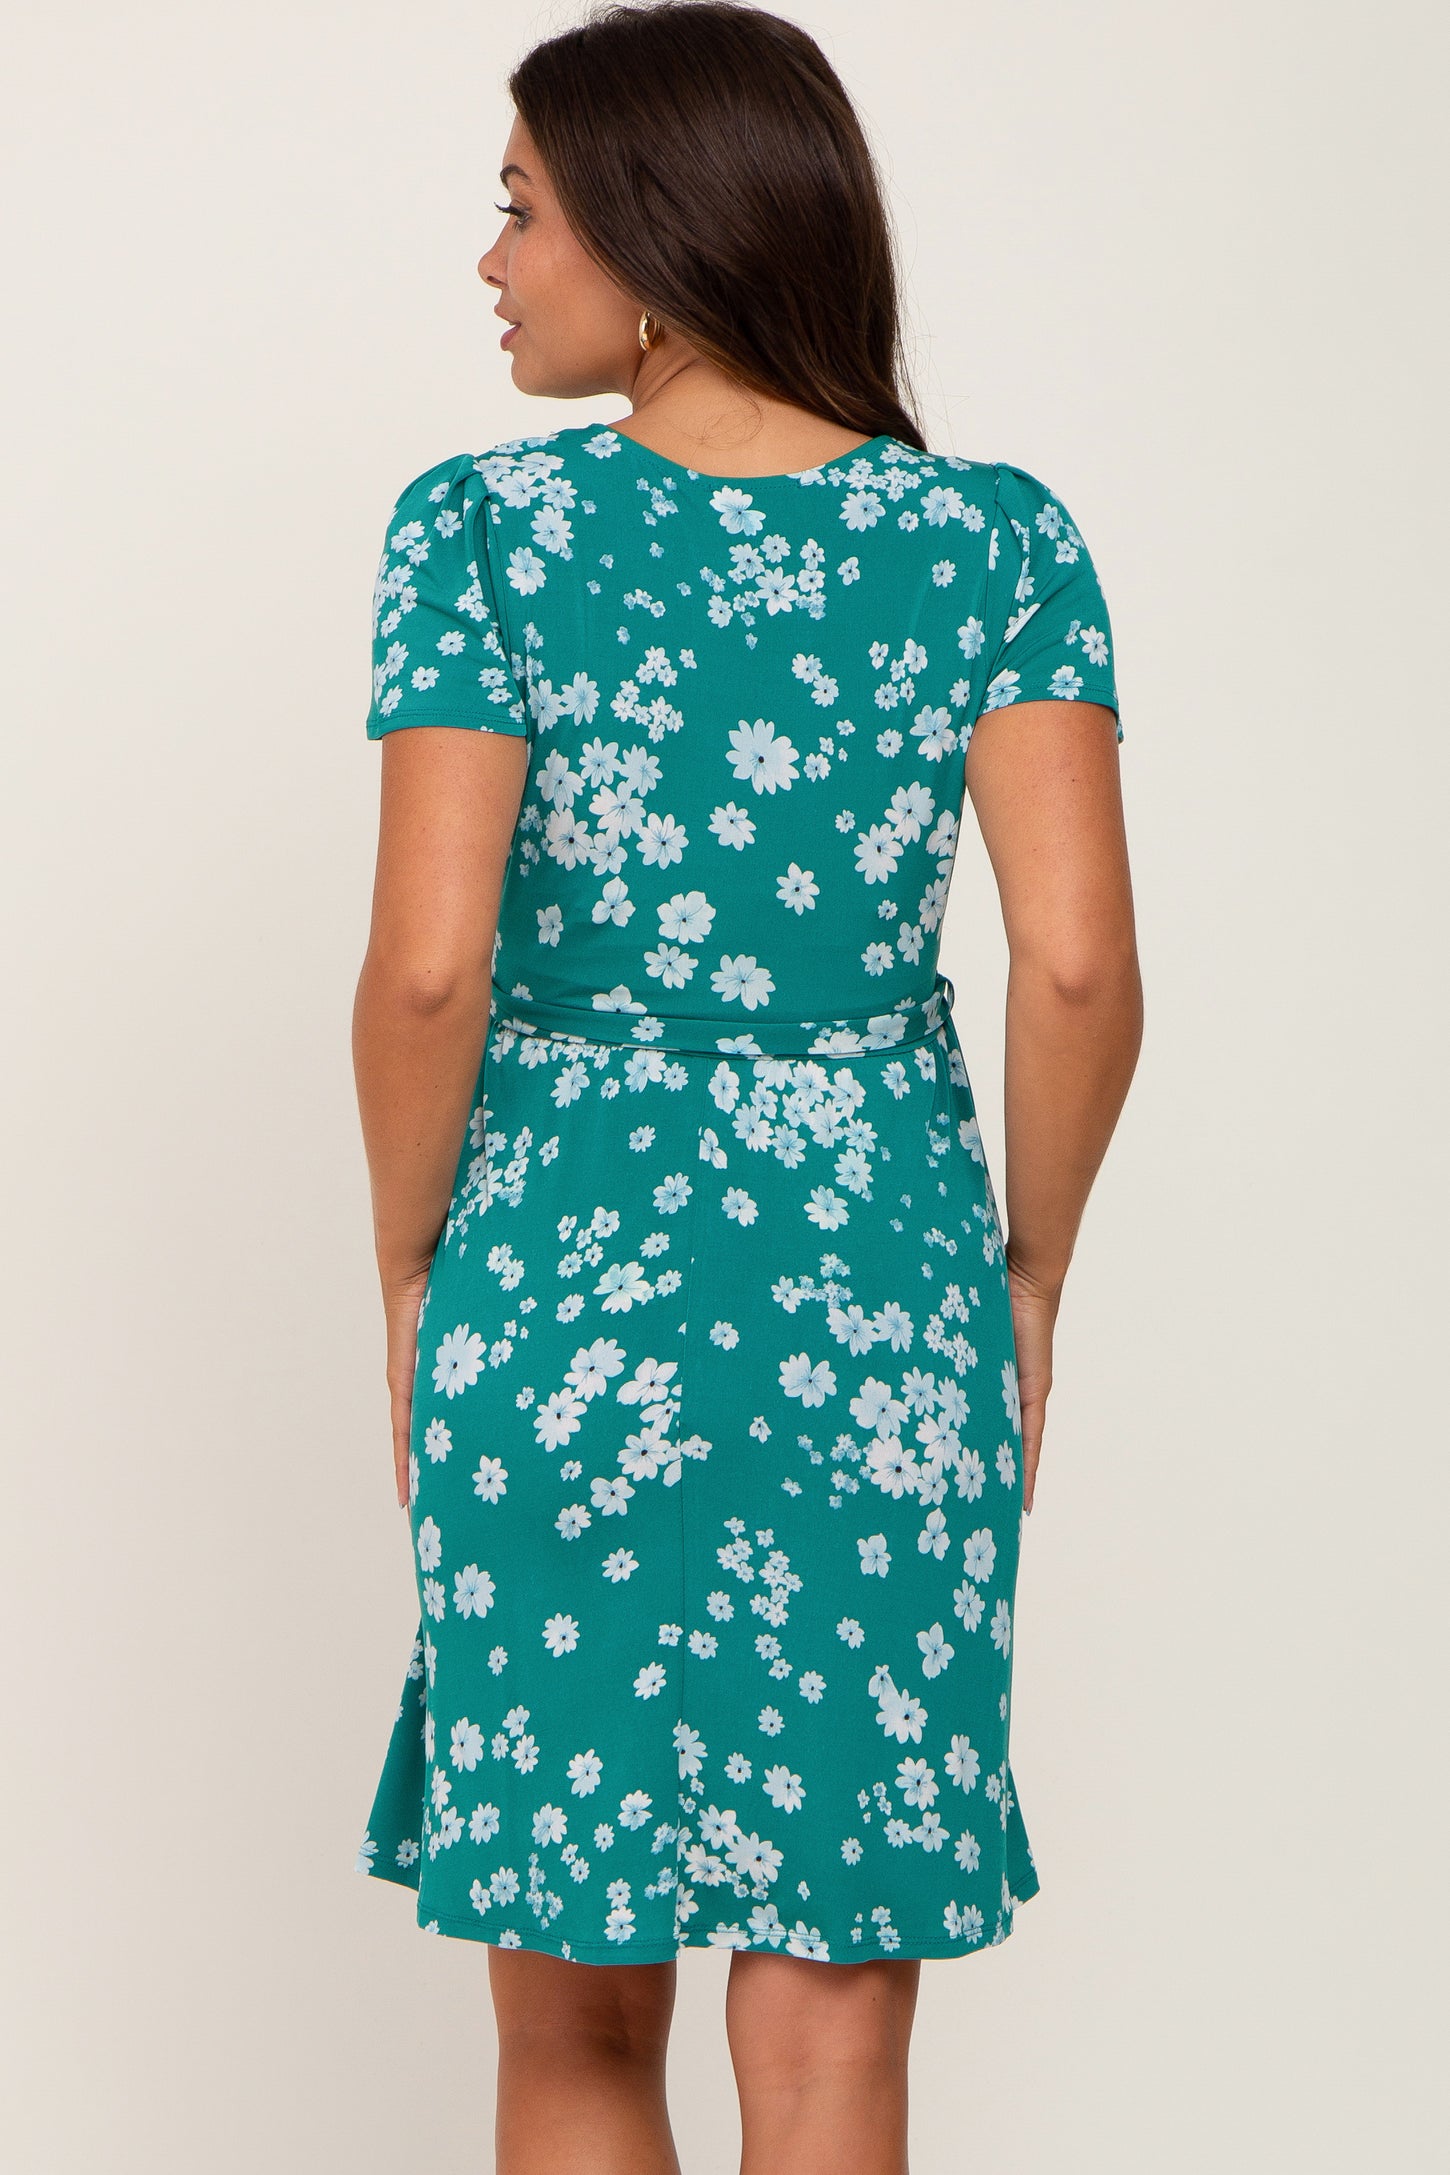 Jade Floral Waist Tie Maternity Wrap Dress